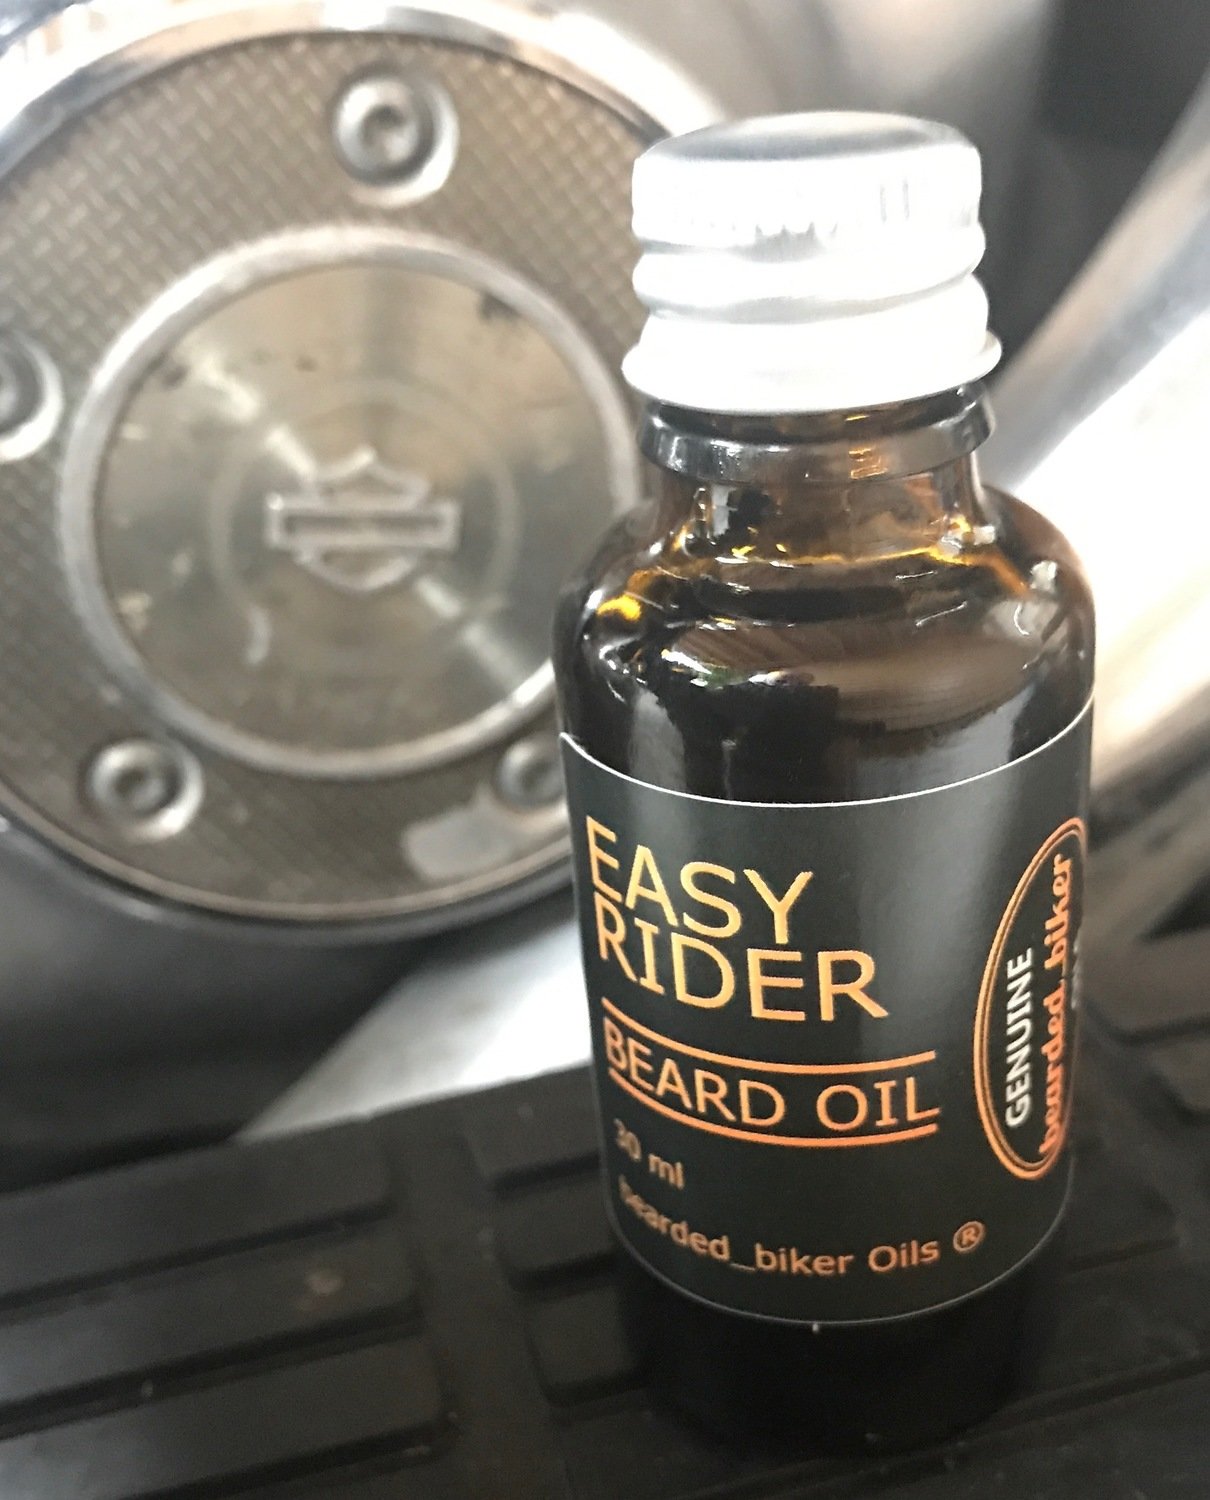 Easy rider Beard Oil 30 ml by bearded_biker Oils